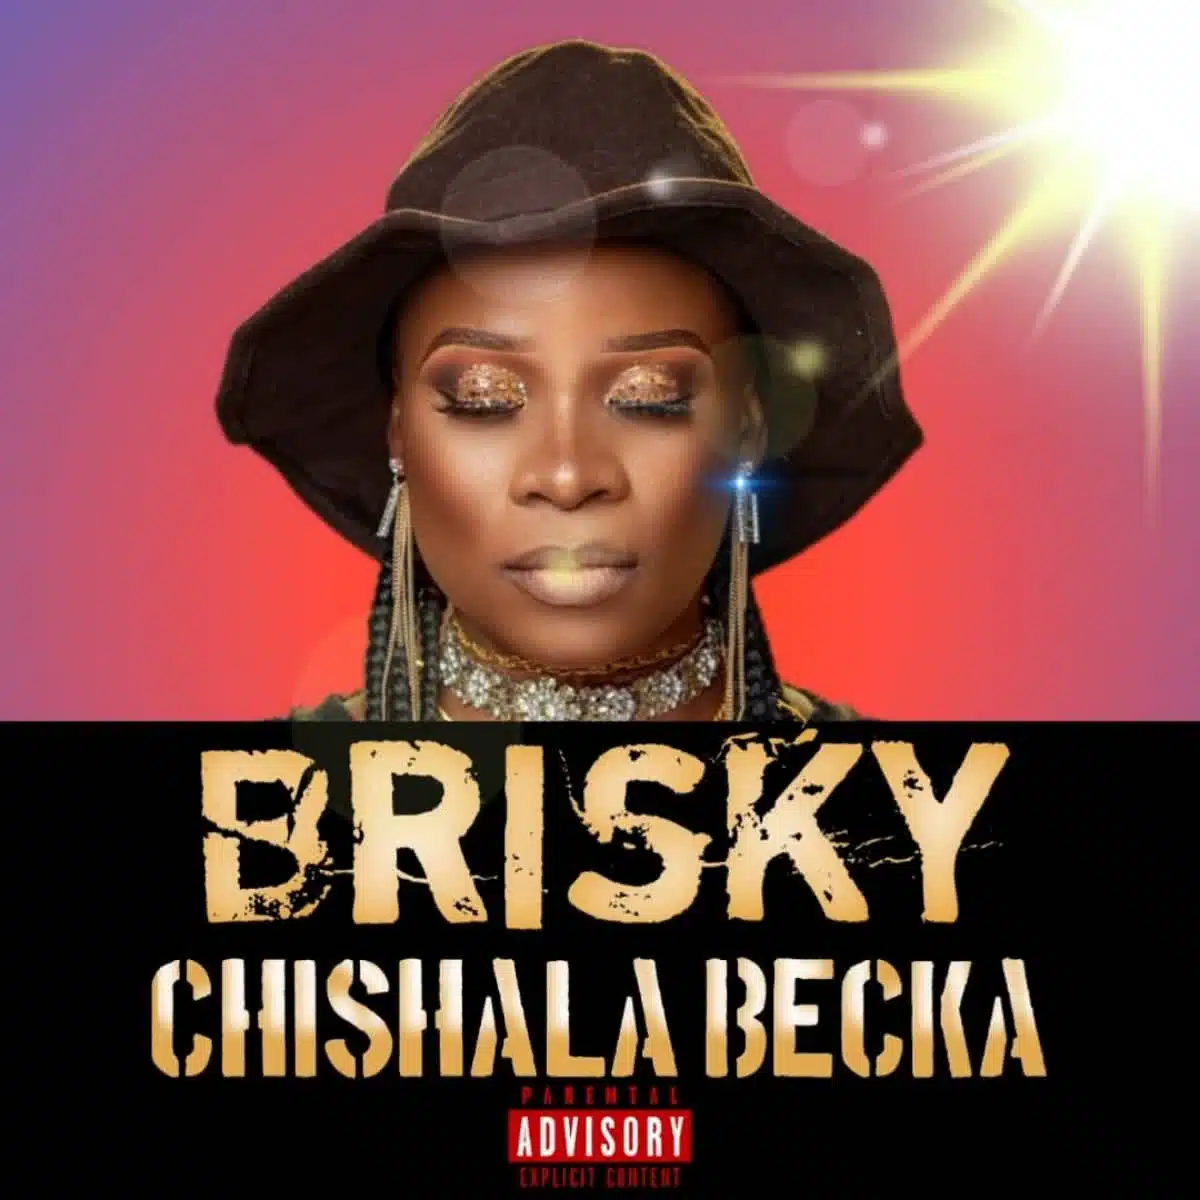 DOWNLOAD: Brisky – “Chishala Becka” Mp3